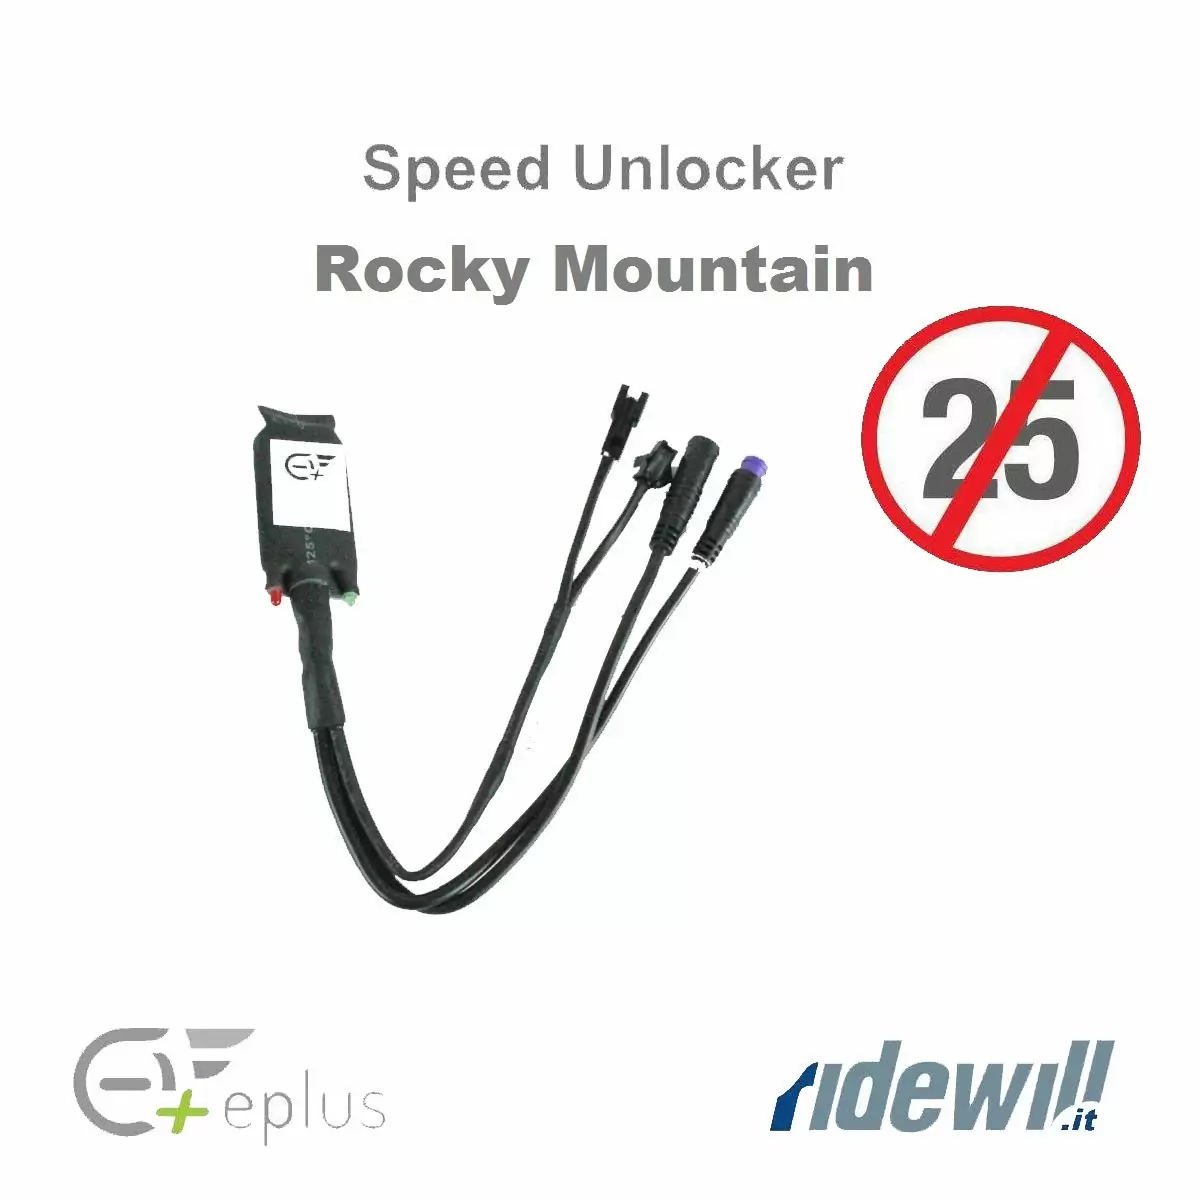 Kit de ajuste de bicicleta eléctrica Racing Speed Unlocker lite Rocky Mountain #1